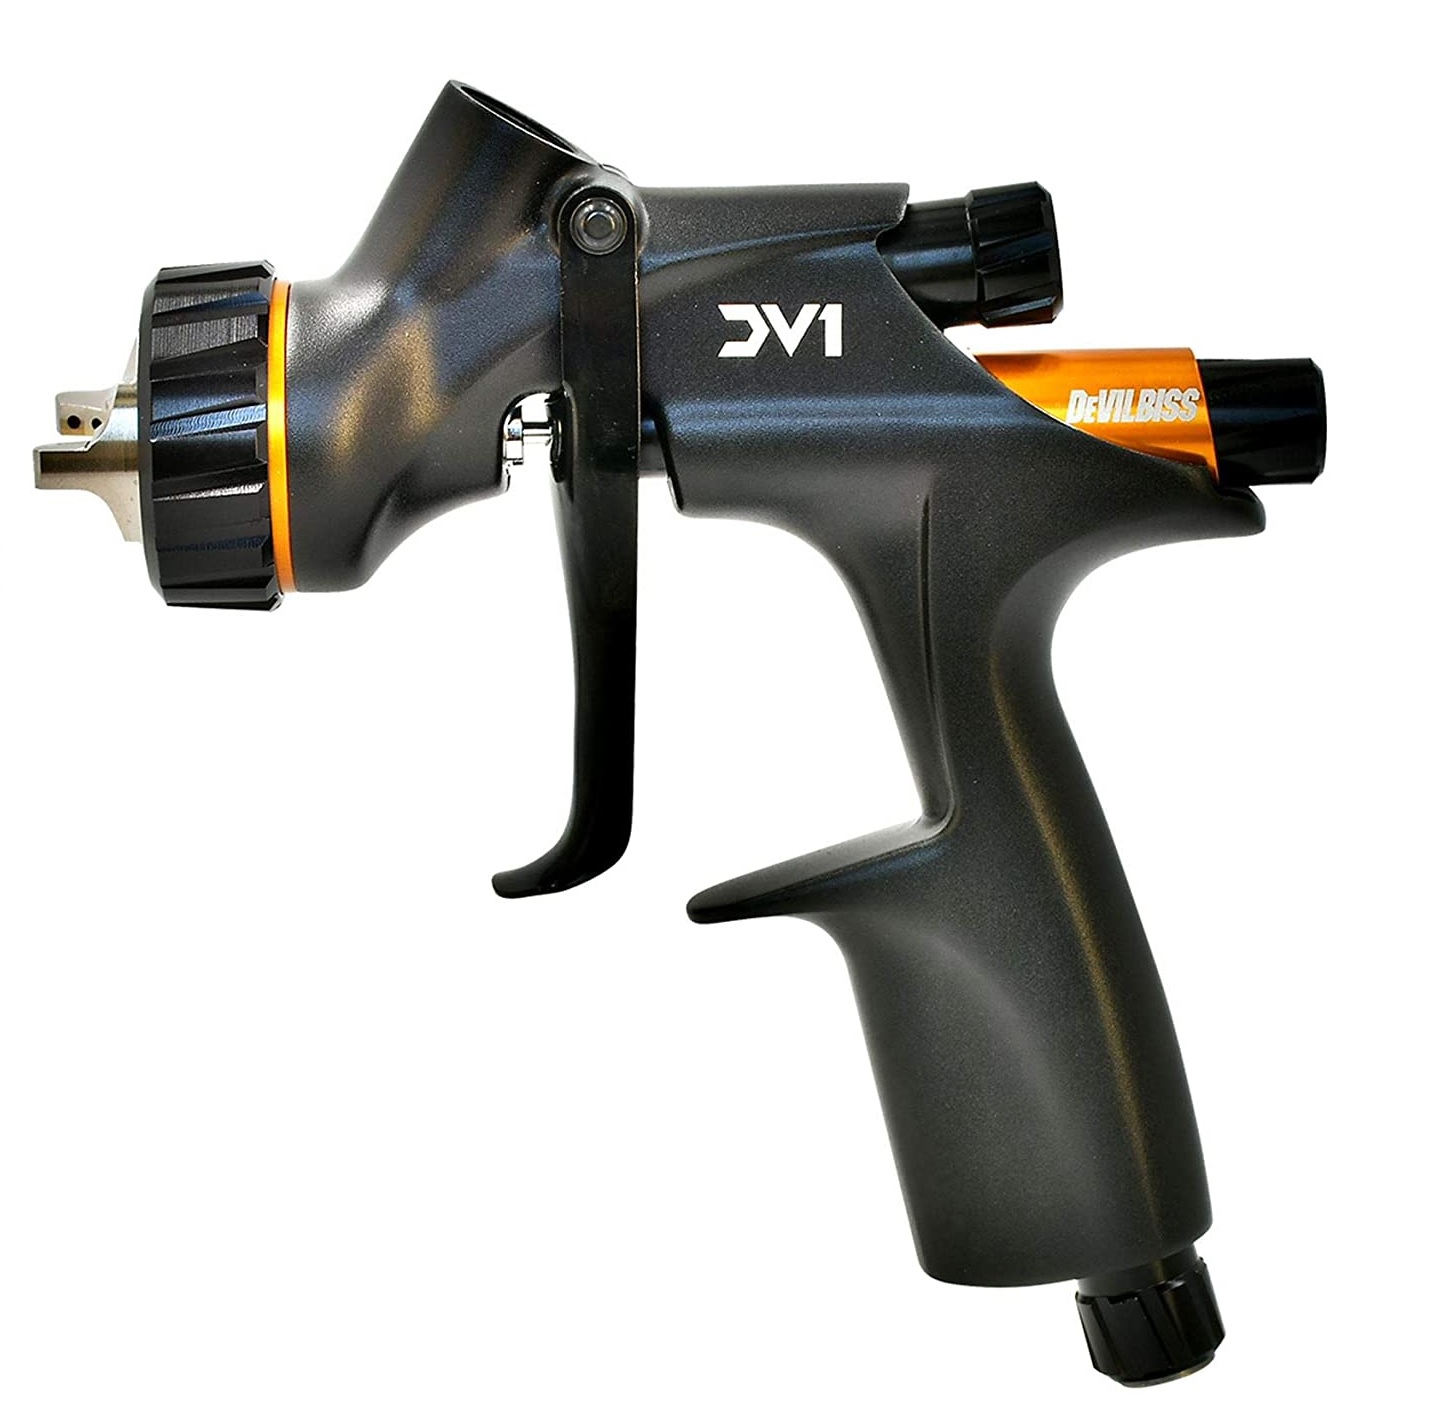 Pistola de Pintura Profissional DeVilbiss DV1-C Clearcoat própria para Verniz sem manômetro digital - Pistolas